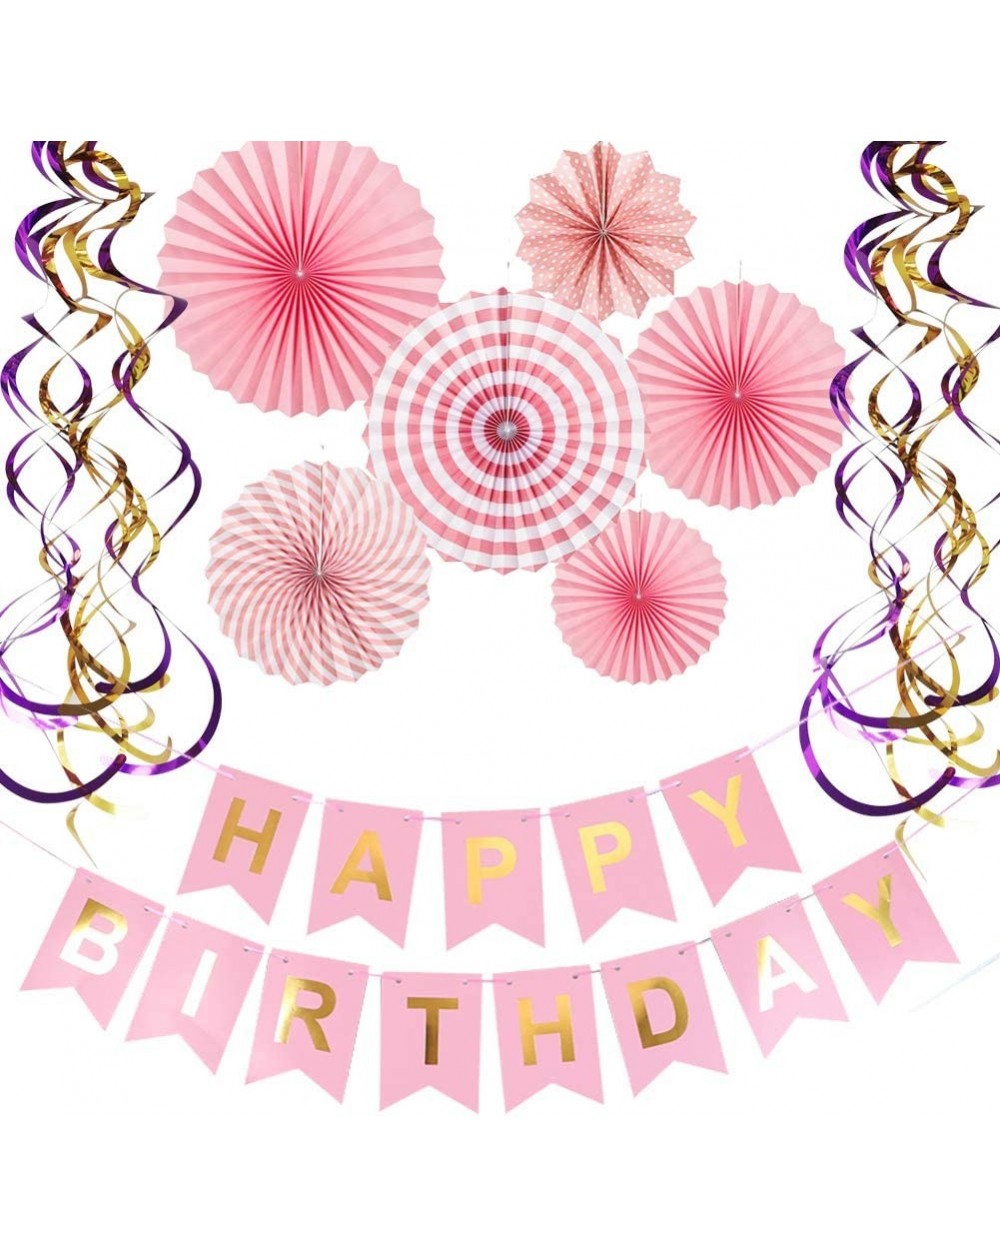 Banners & Garlands Happy Birthday Banner Paper Fan Flower Set Metalic Swirls for Birthday Party Decorations Pink - Birthday P...